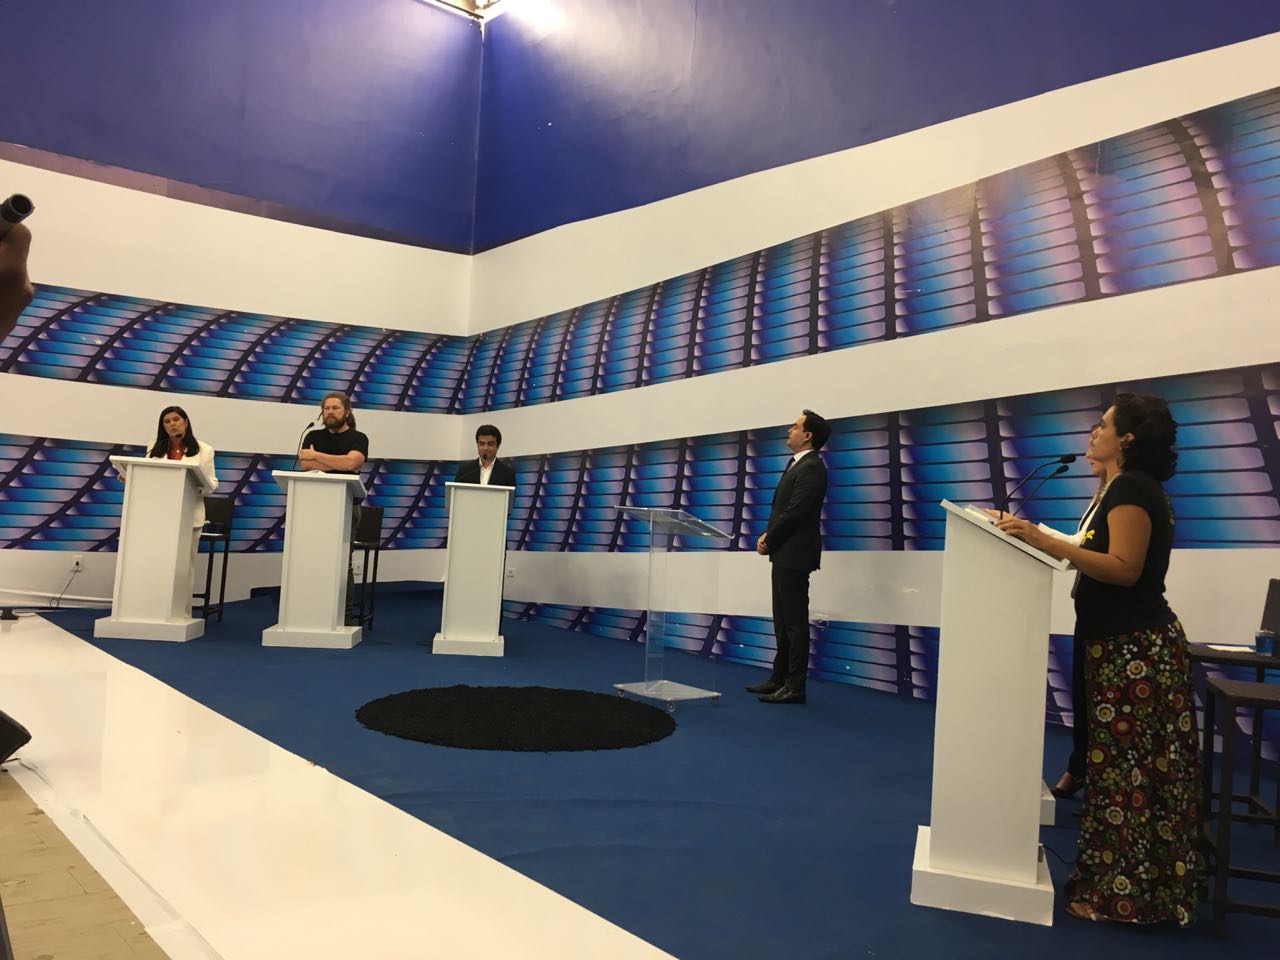 WhatsApp Image 2018 08 27 at 22.07.54 - DEBATE TV MASTER: saiba tudo que aconteceu na discussão entre os candidatos a vice-governador da Paraíba